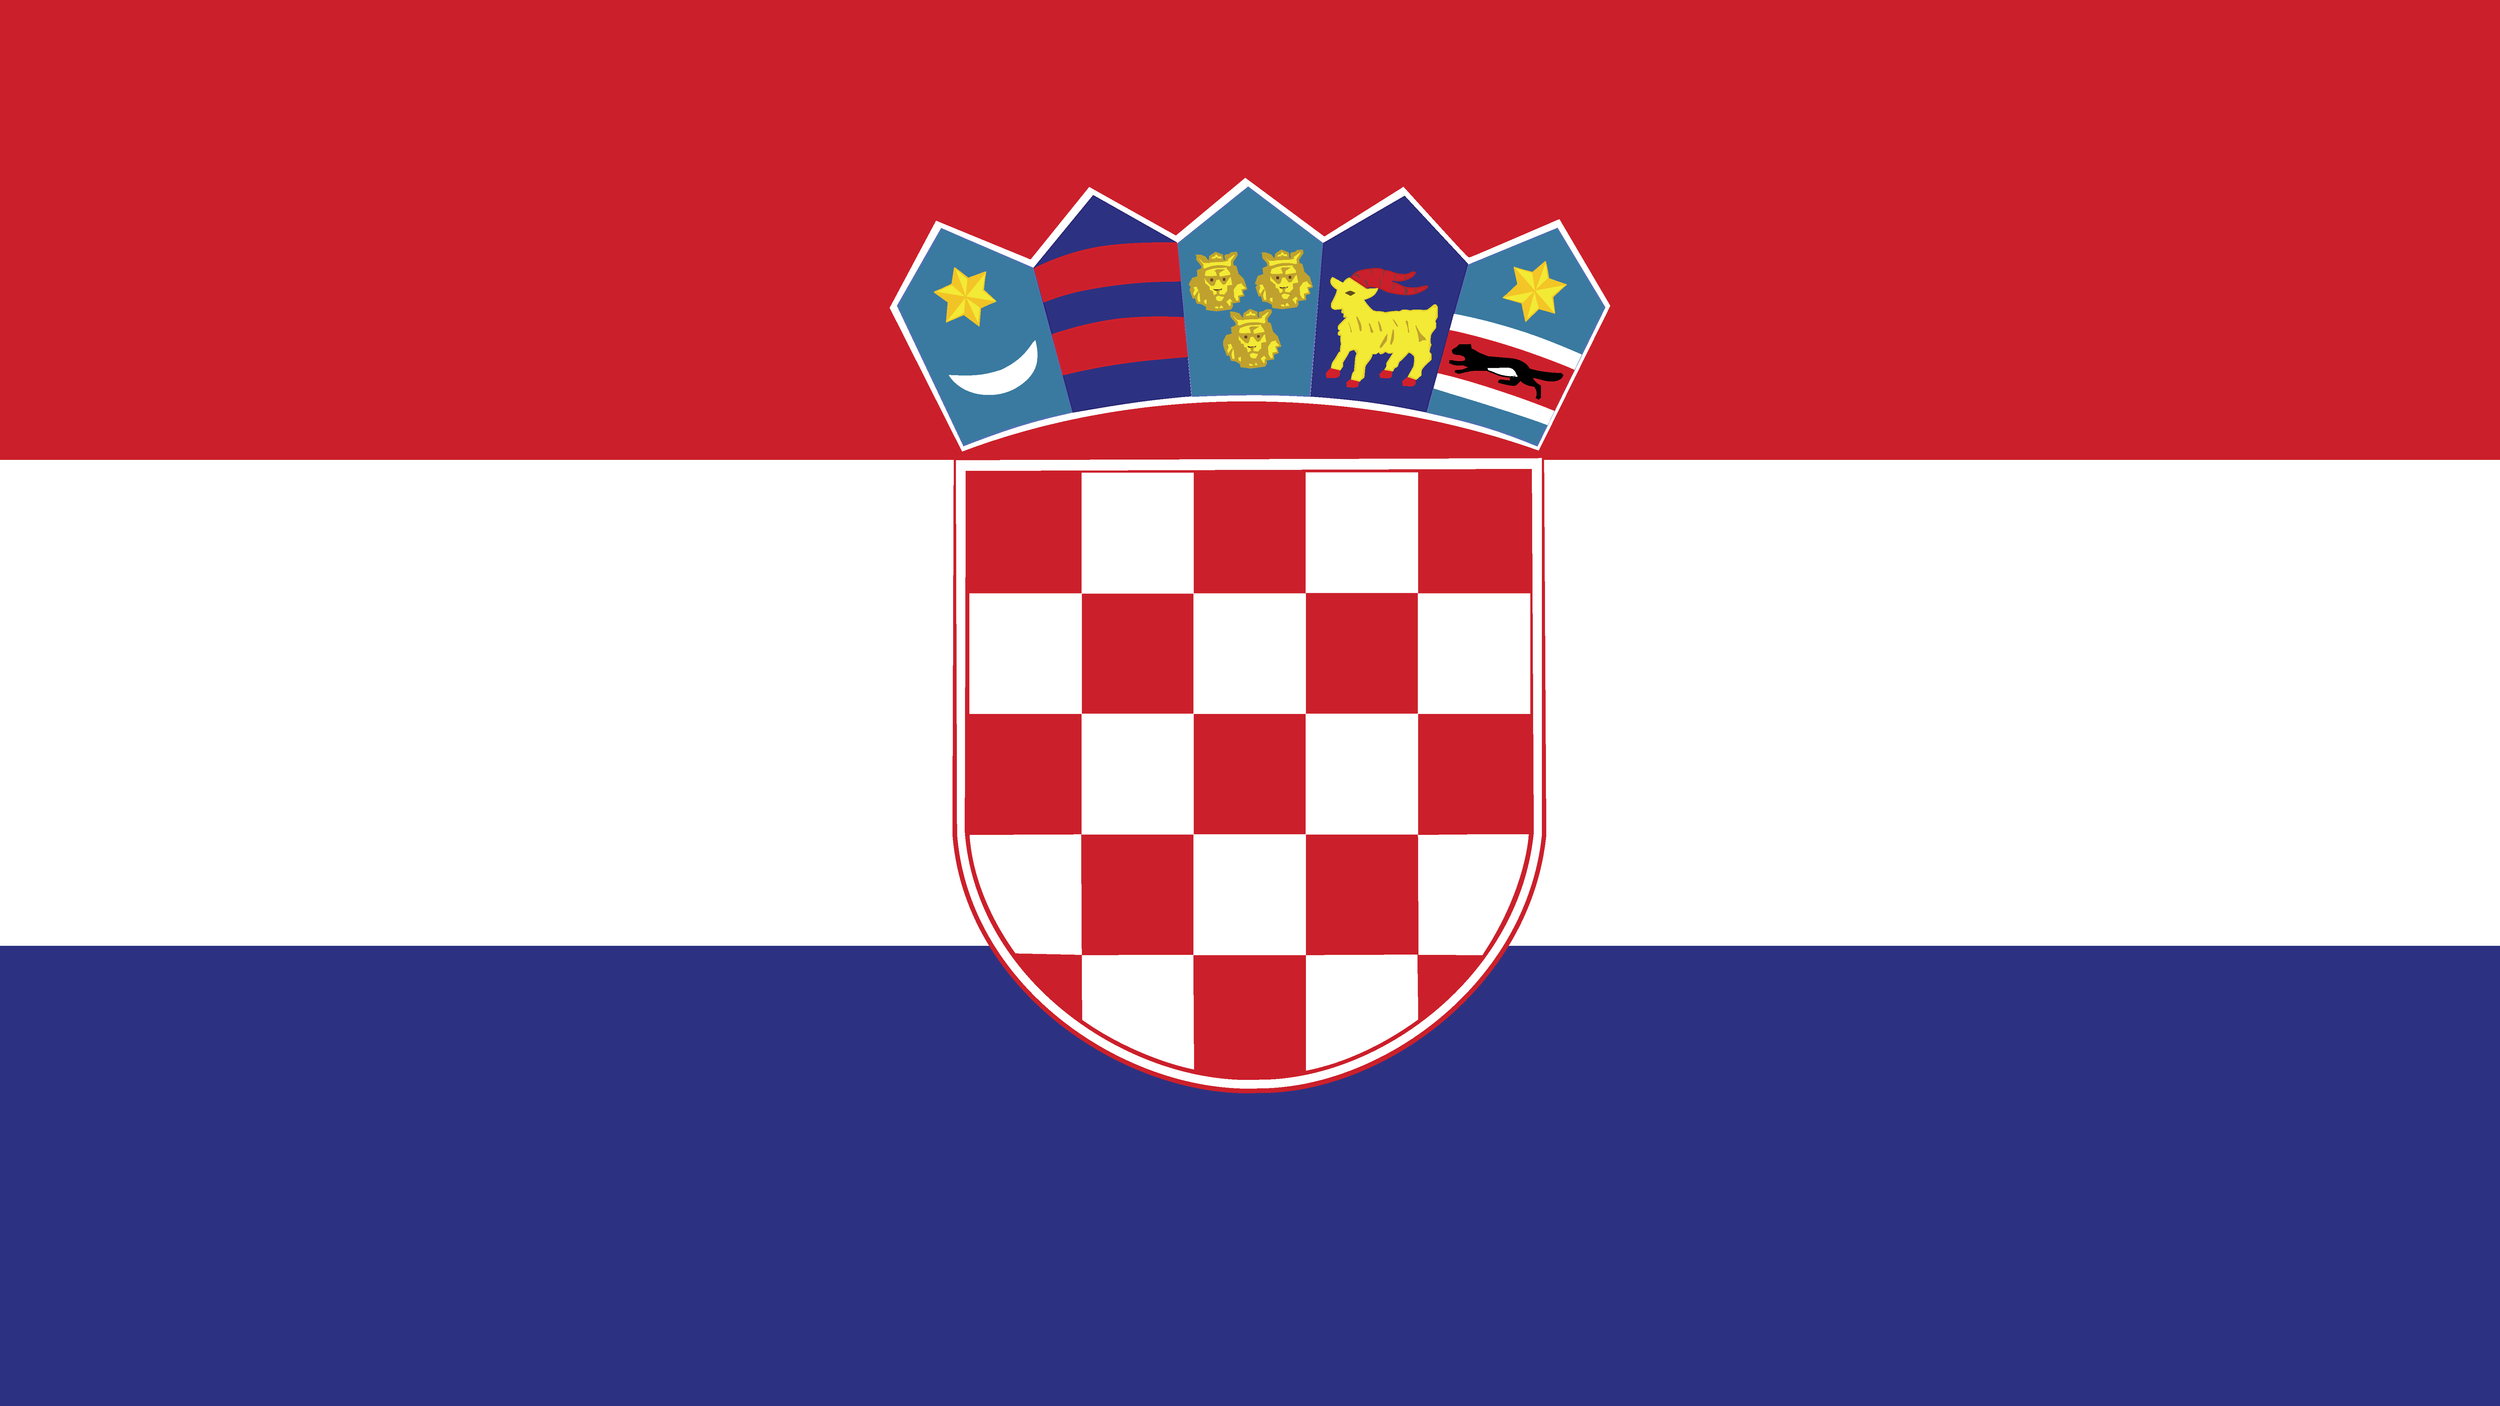 Croatia, 1991